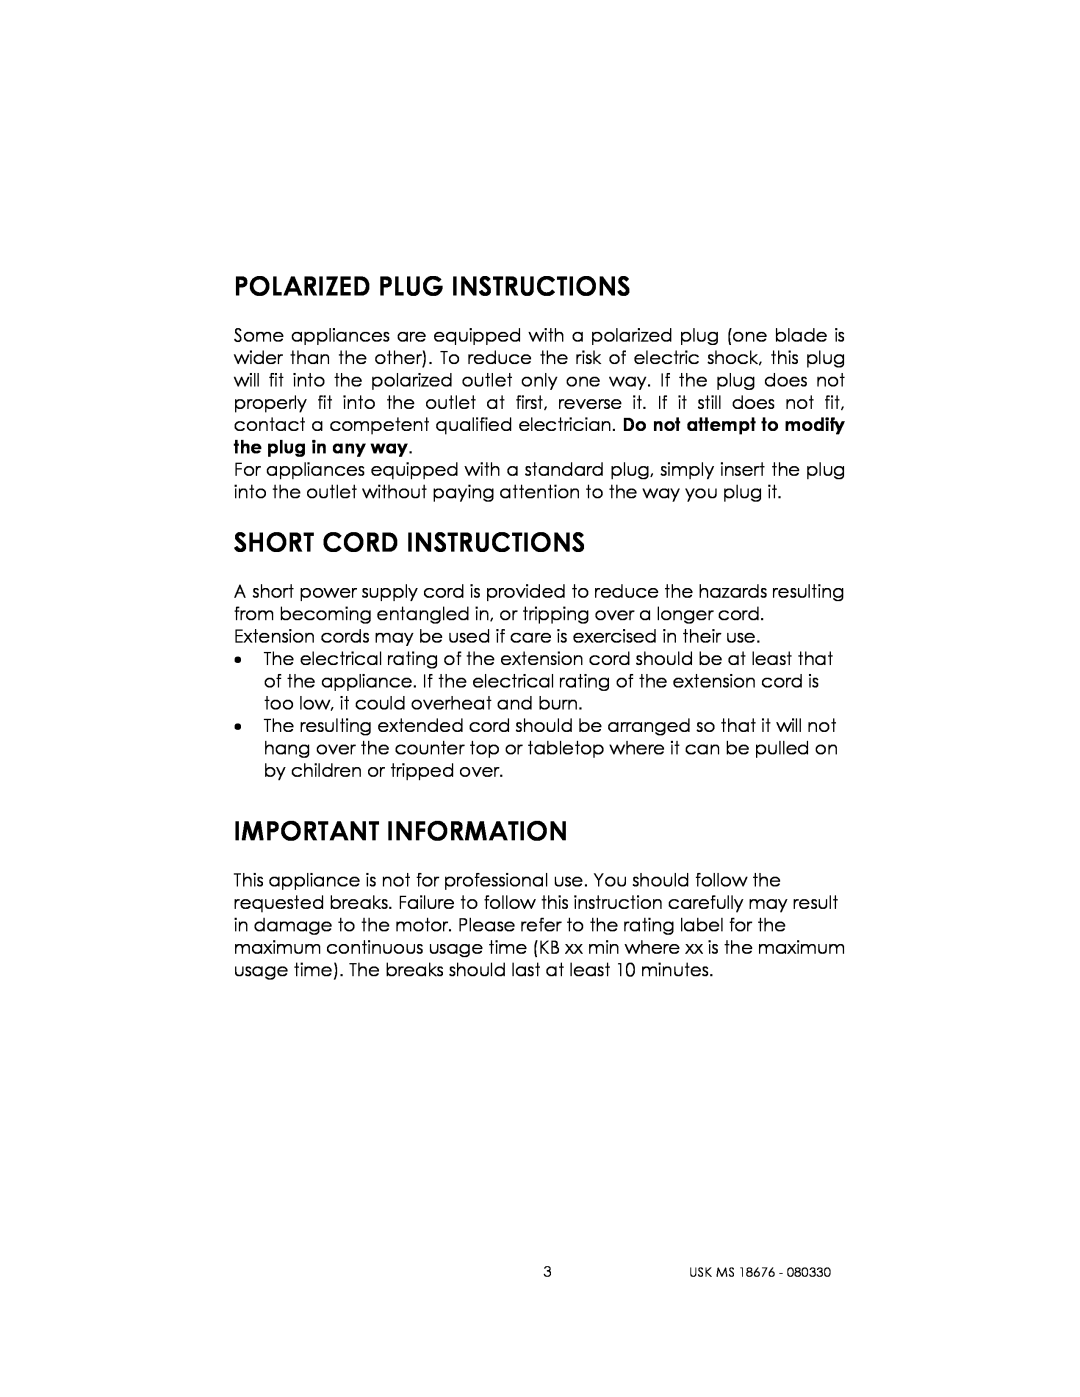 Kalorik USK MS 18676 manual Polarized Plug Instructions, Short Cord Instructions, Important Information 